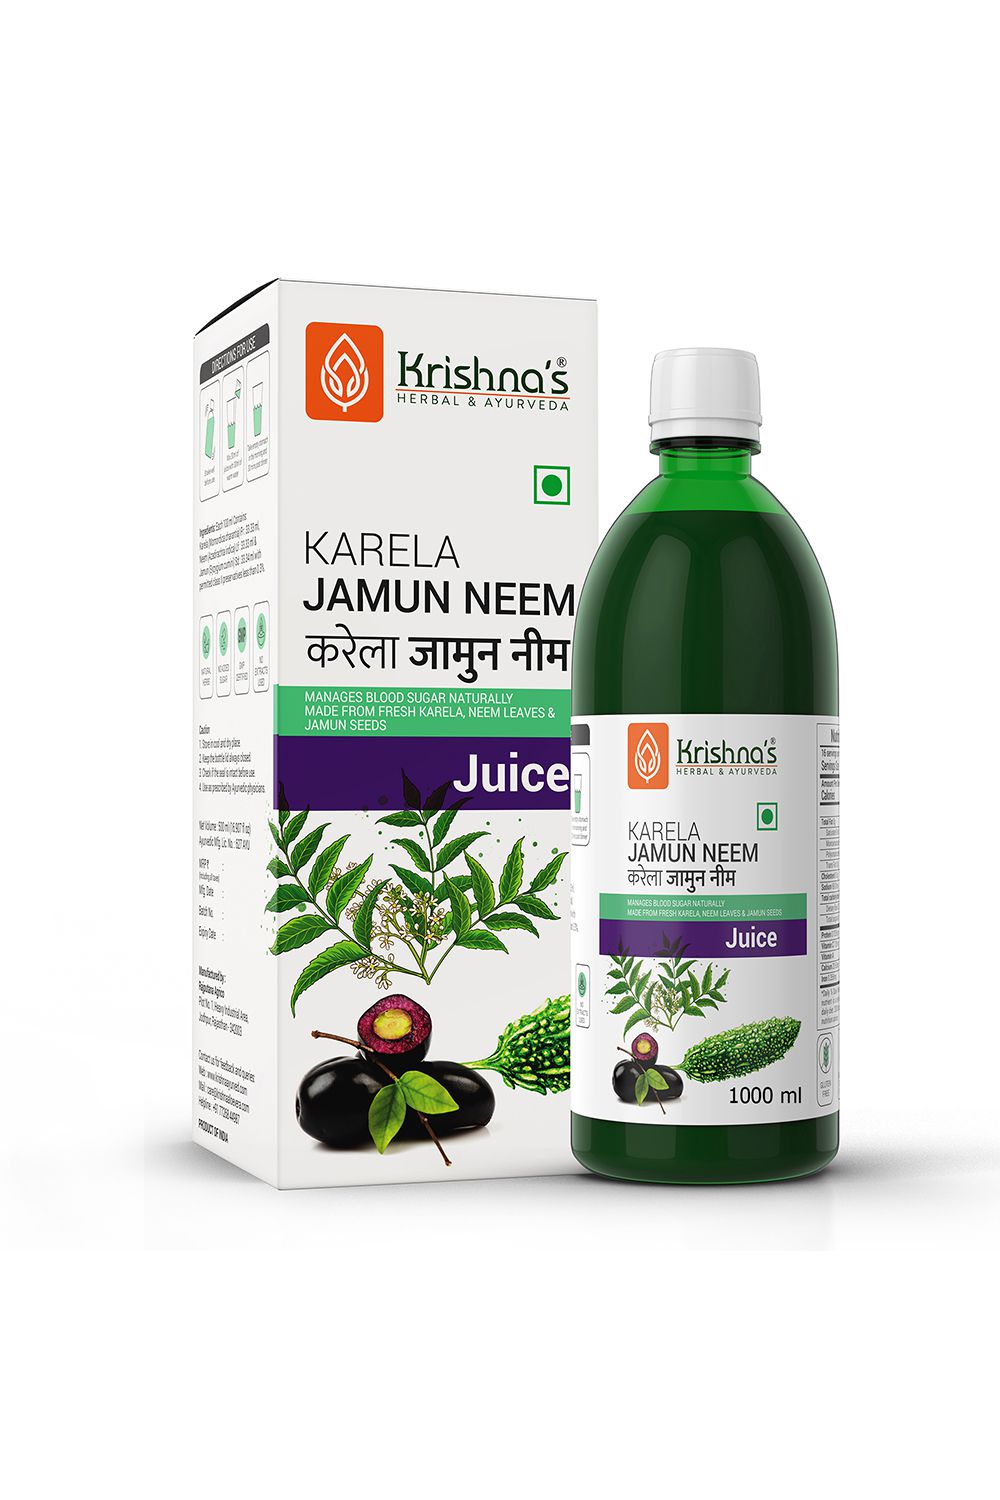     			Krishna's Herbal & Ayurveda Karela Jamun Neem Juice 1000ml